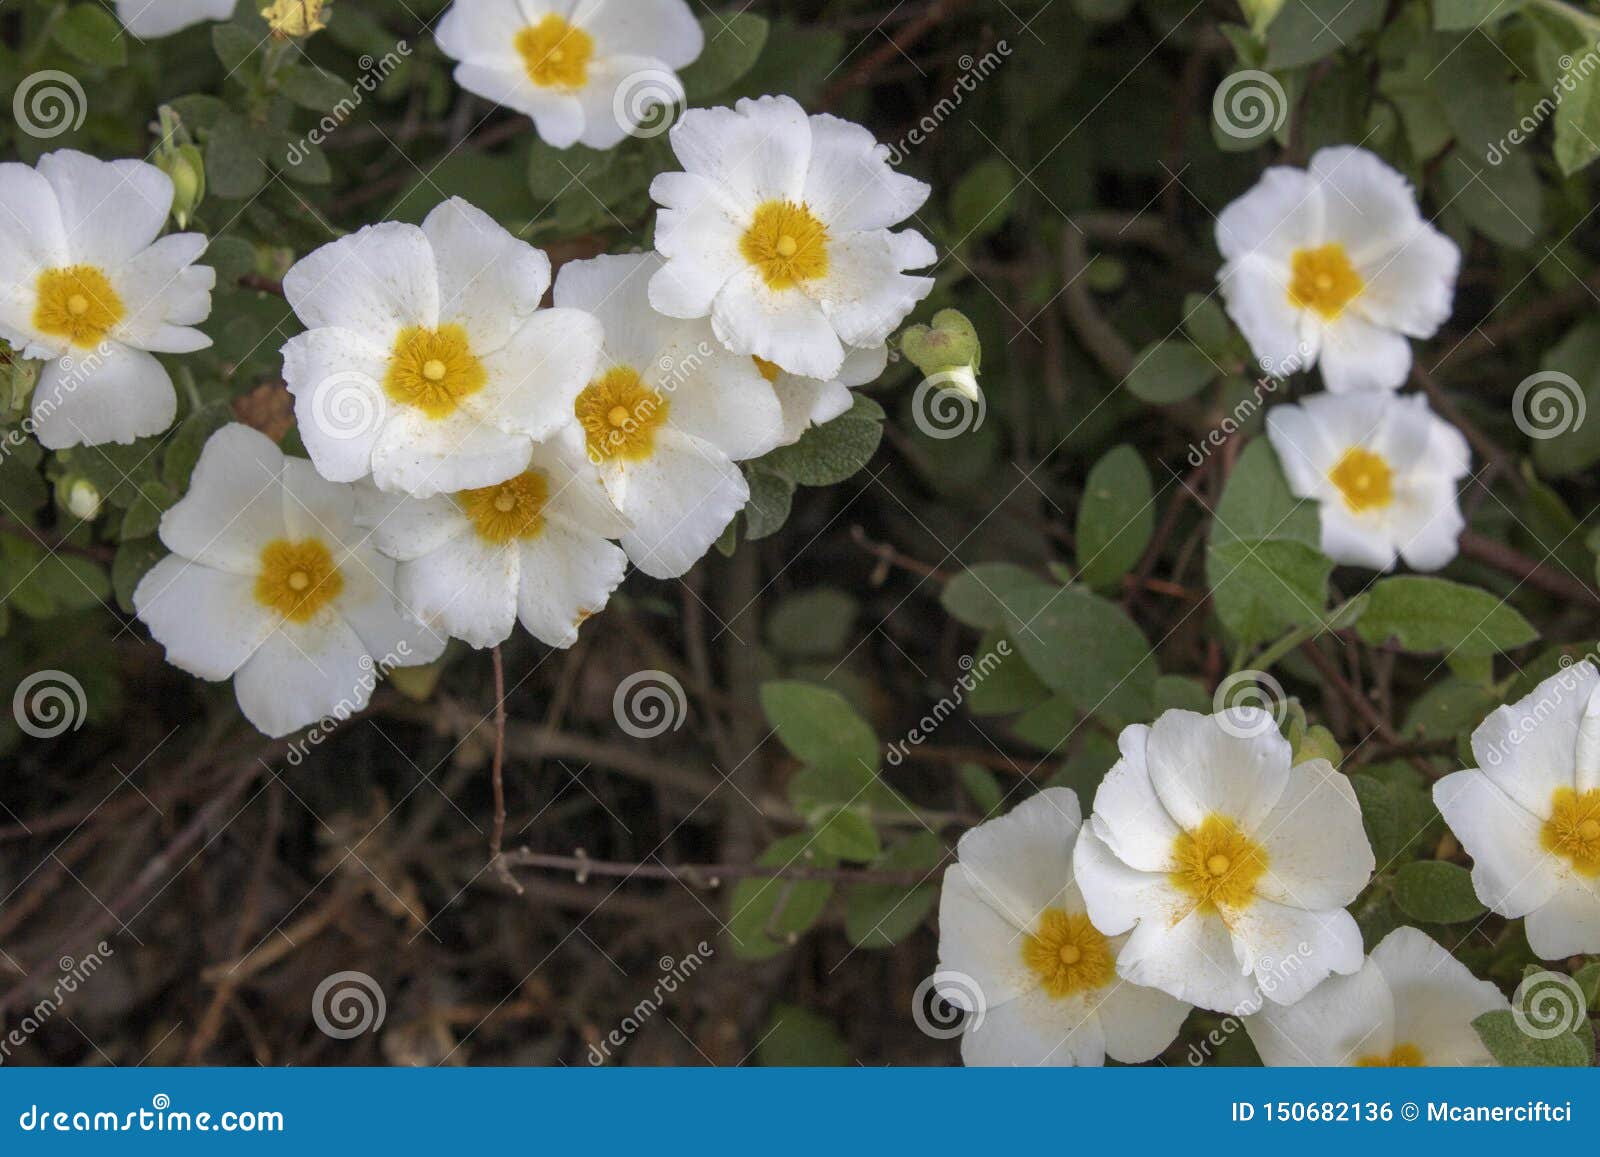 close-up shoot of salvia cistus flower